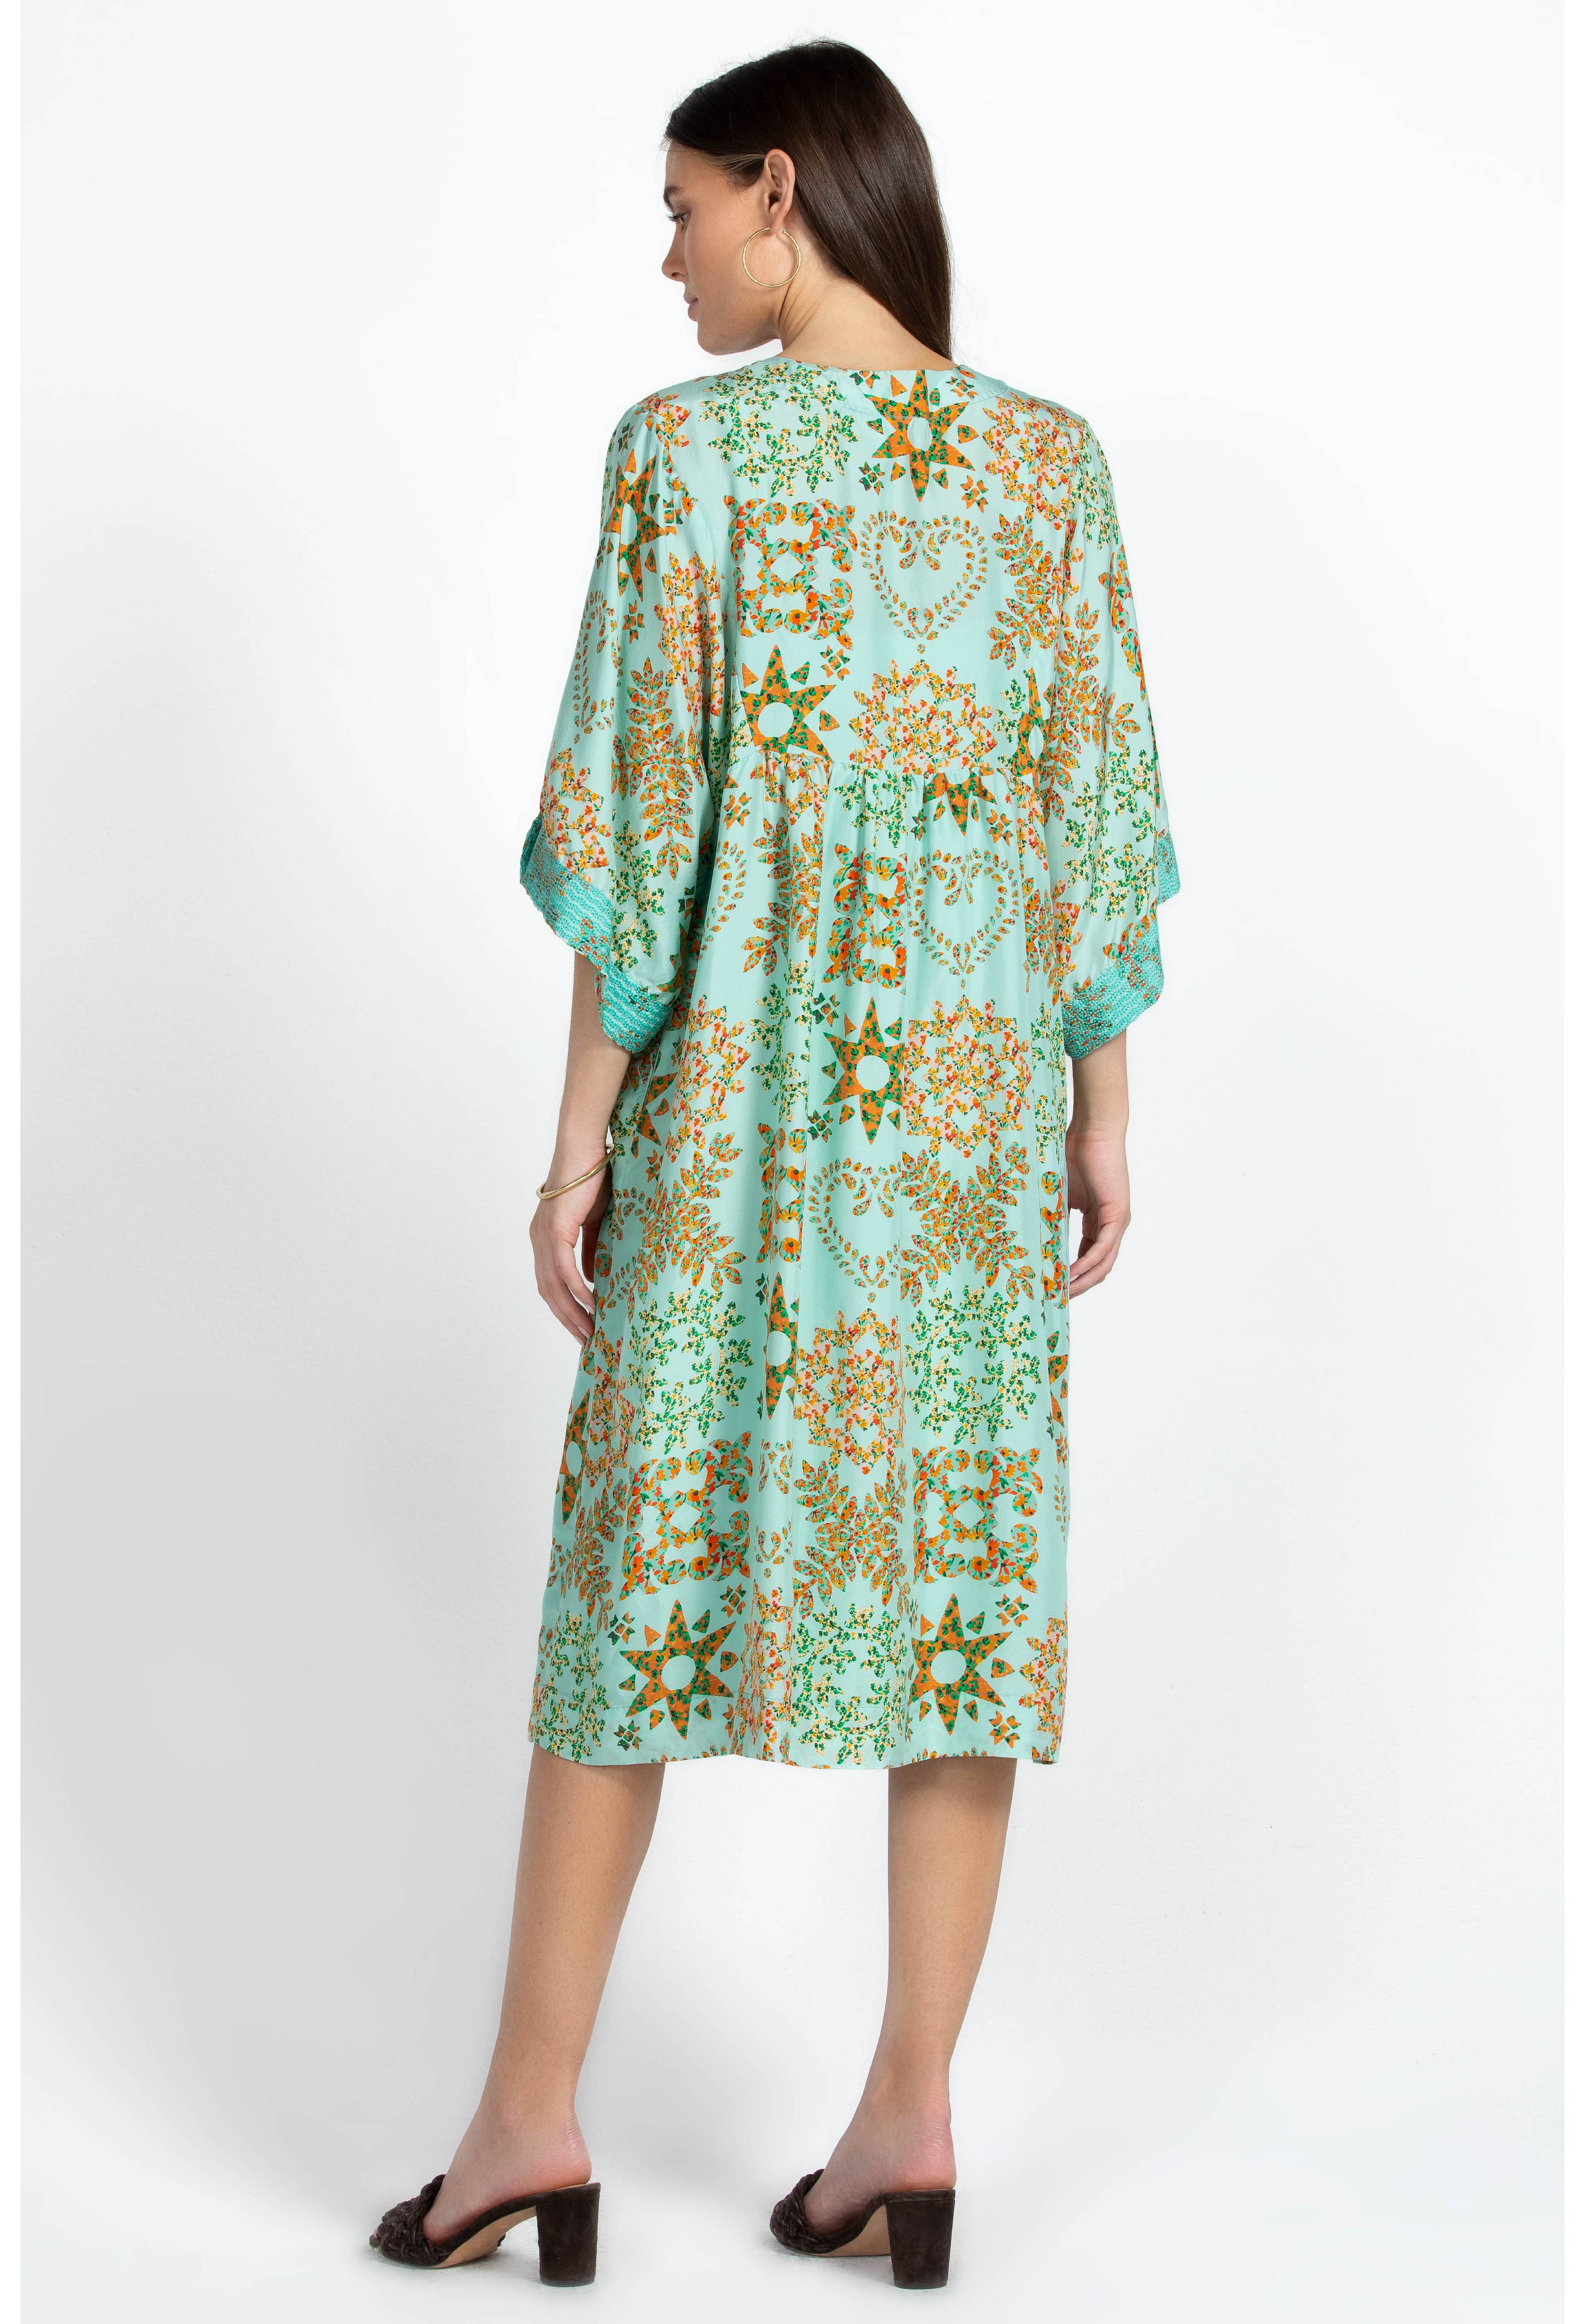 Corbetta Kimono Dress, , large image number 4